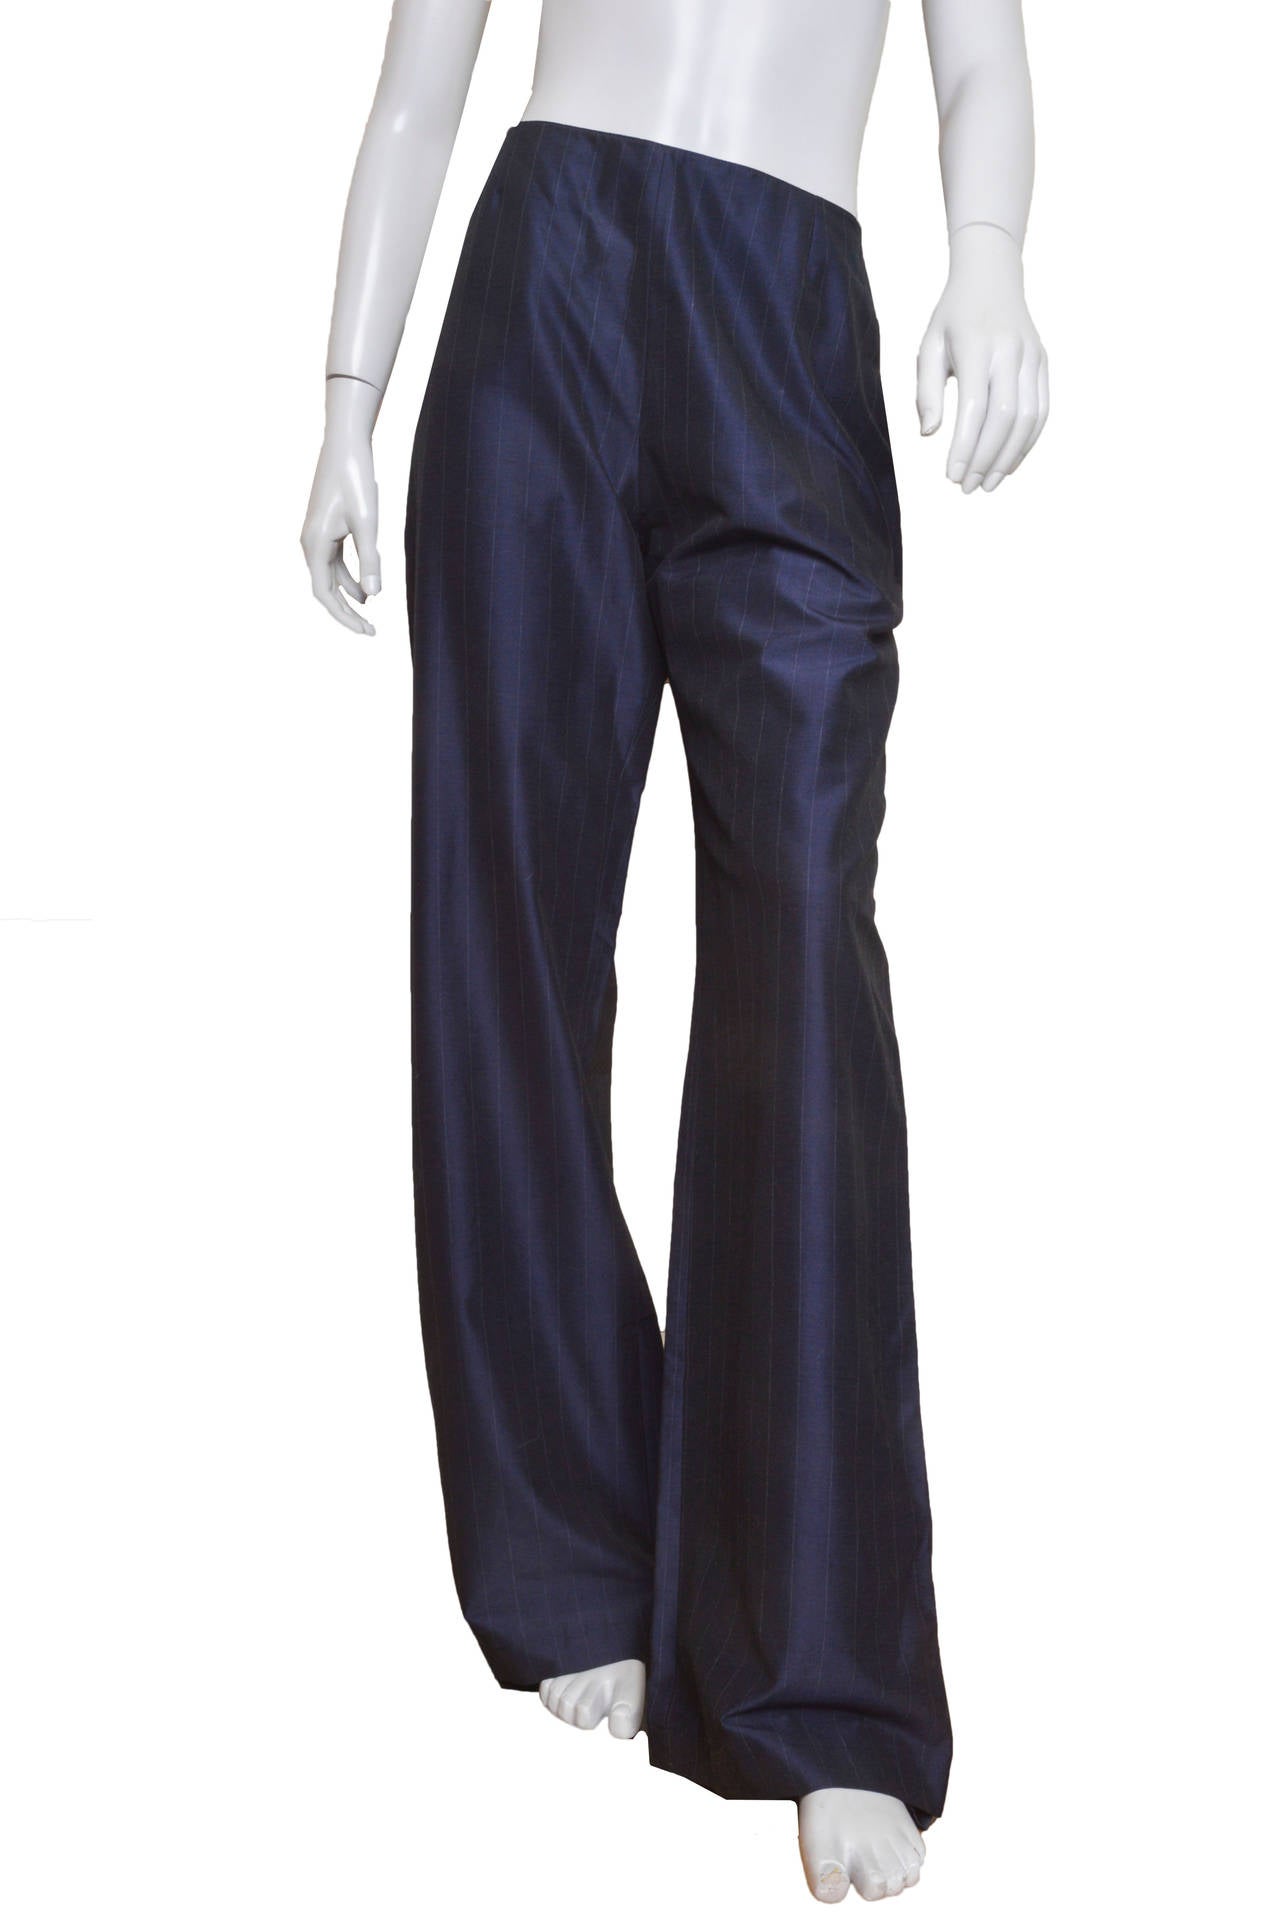 Thierry Mugler Bib Navy Pinstripe Avant Garde Pant Suit 1